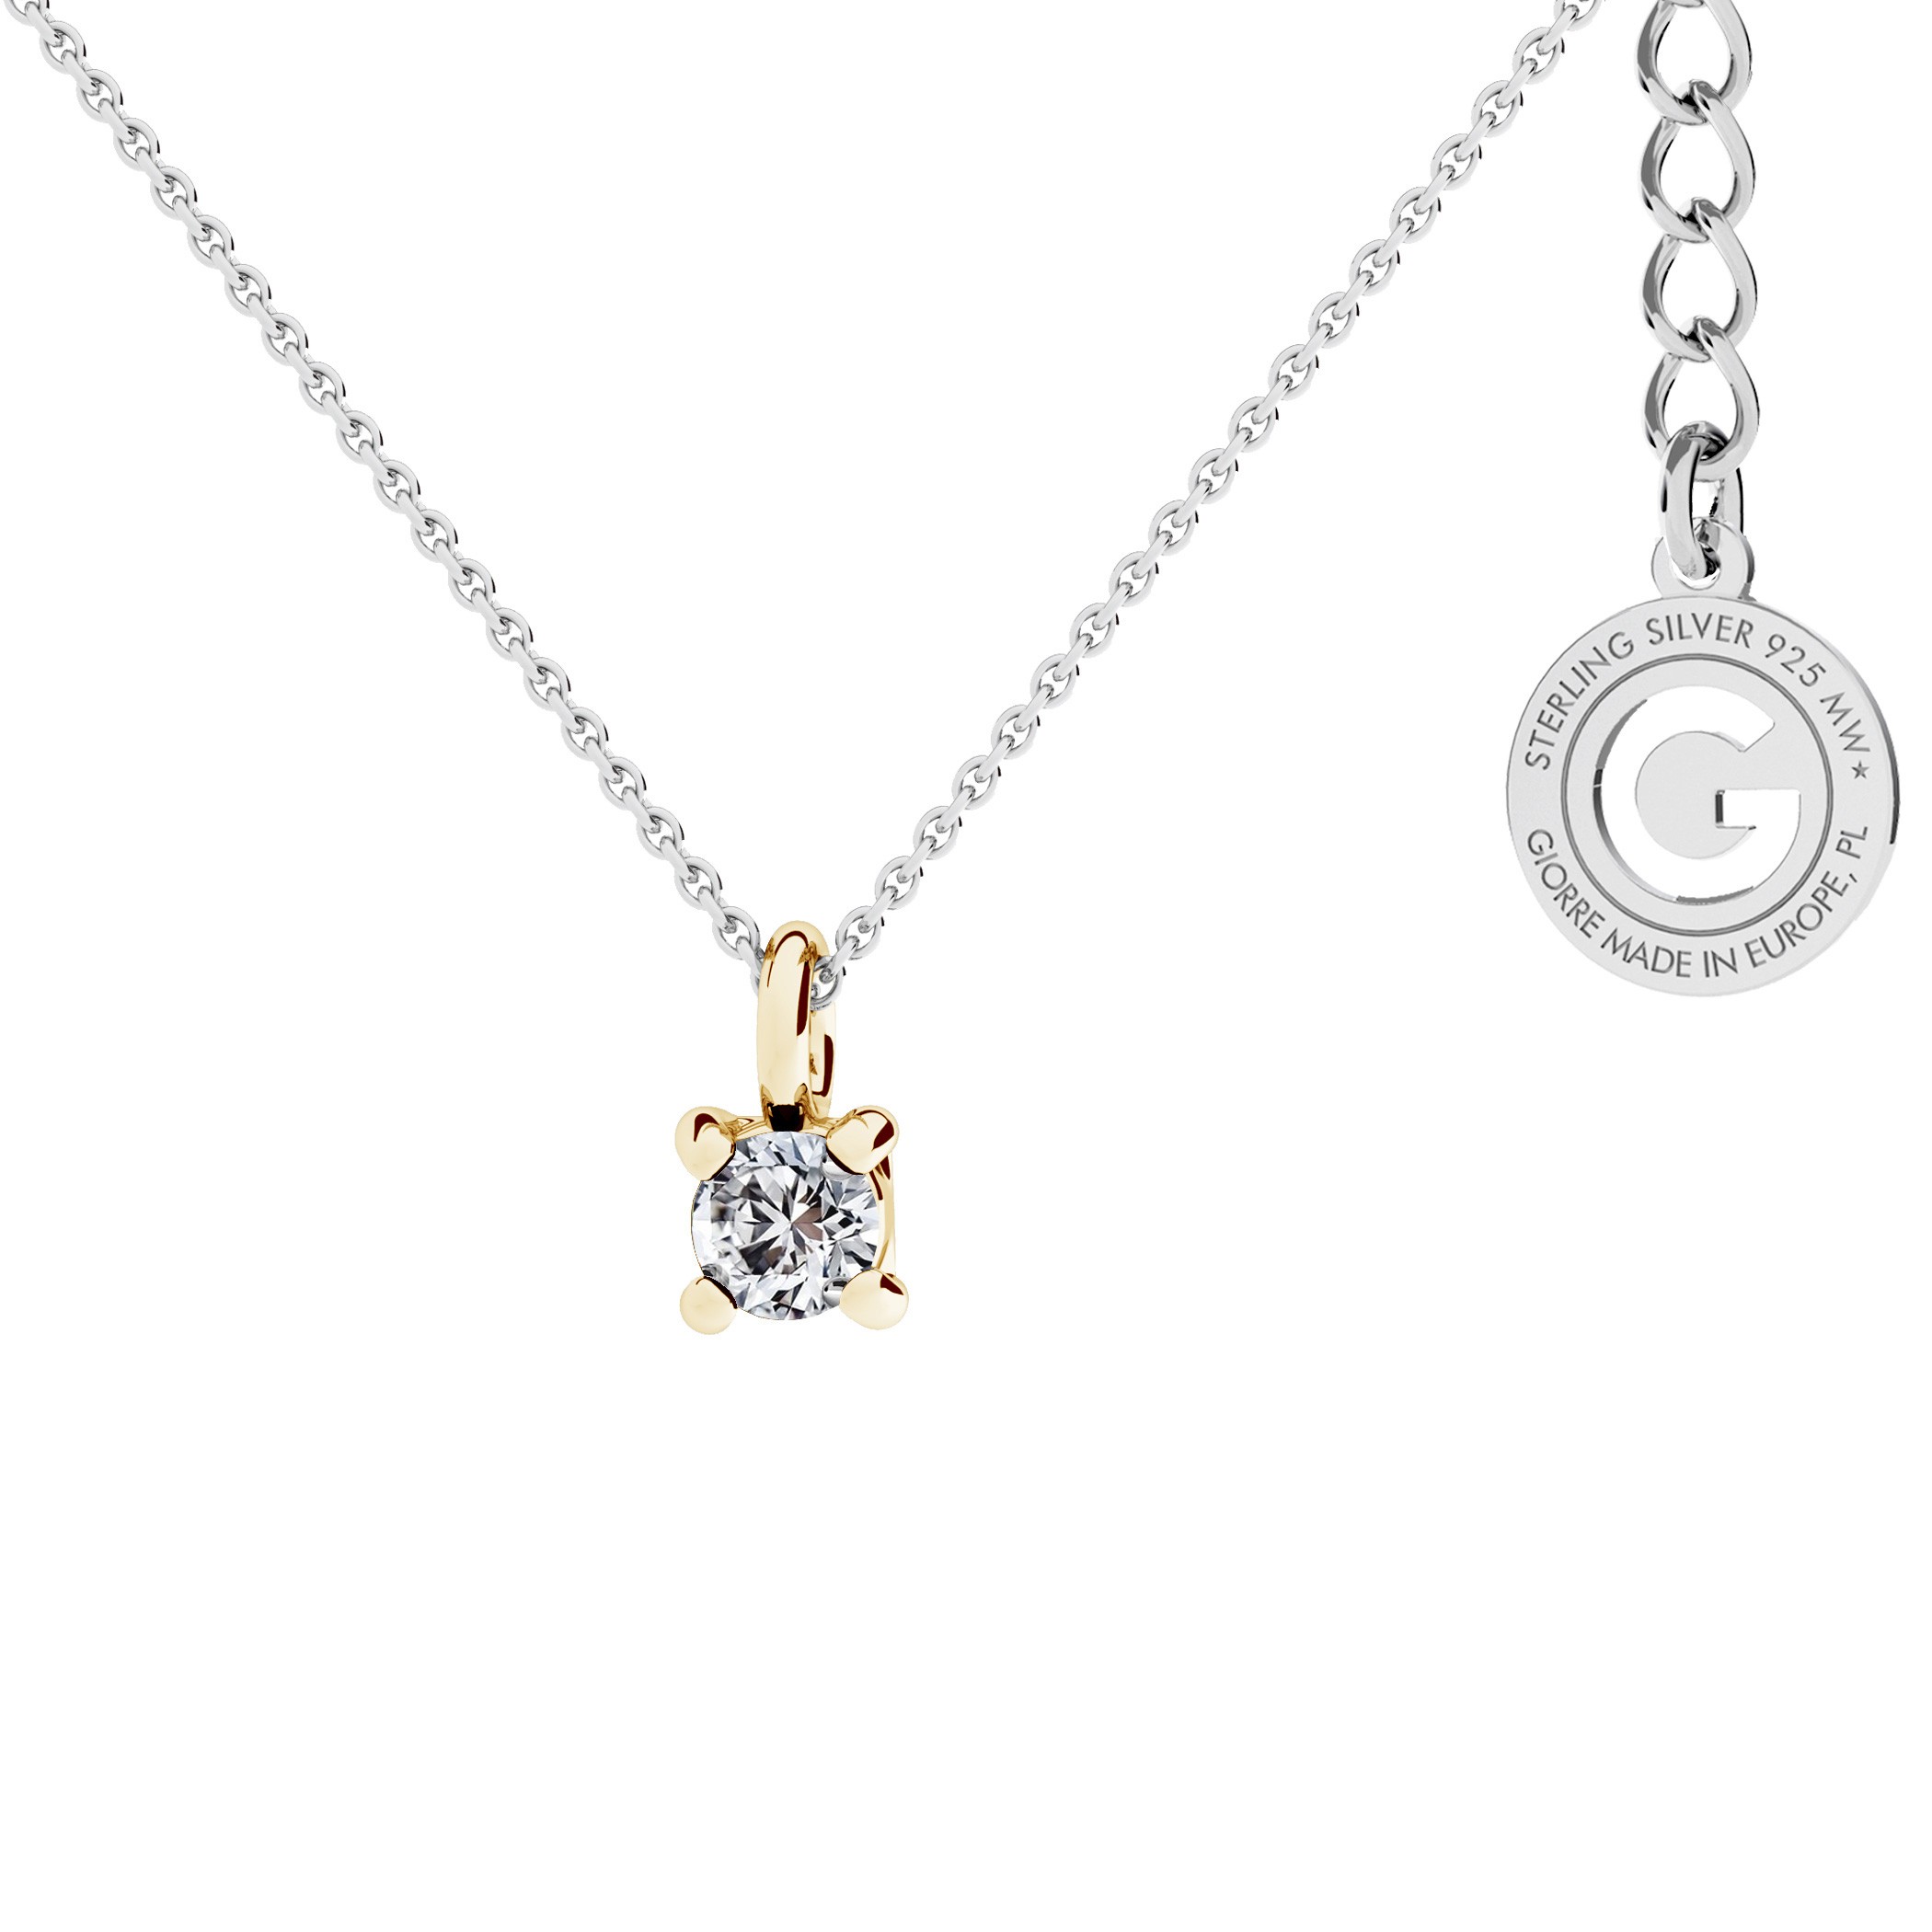 Silver necklace with zirconia , silver 925